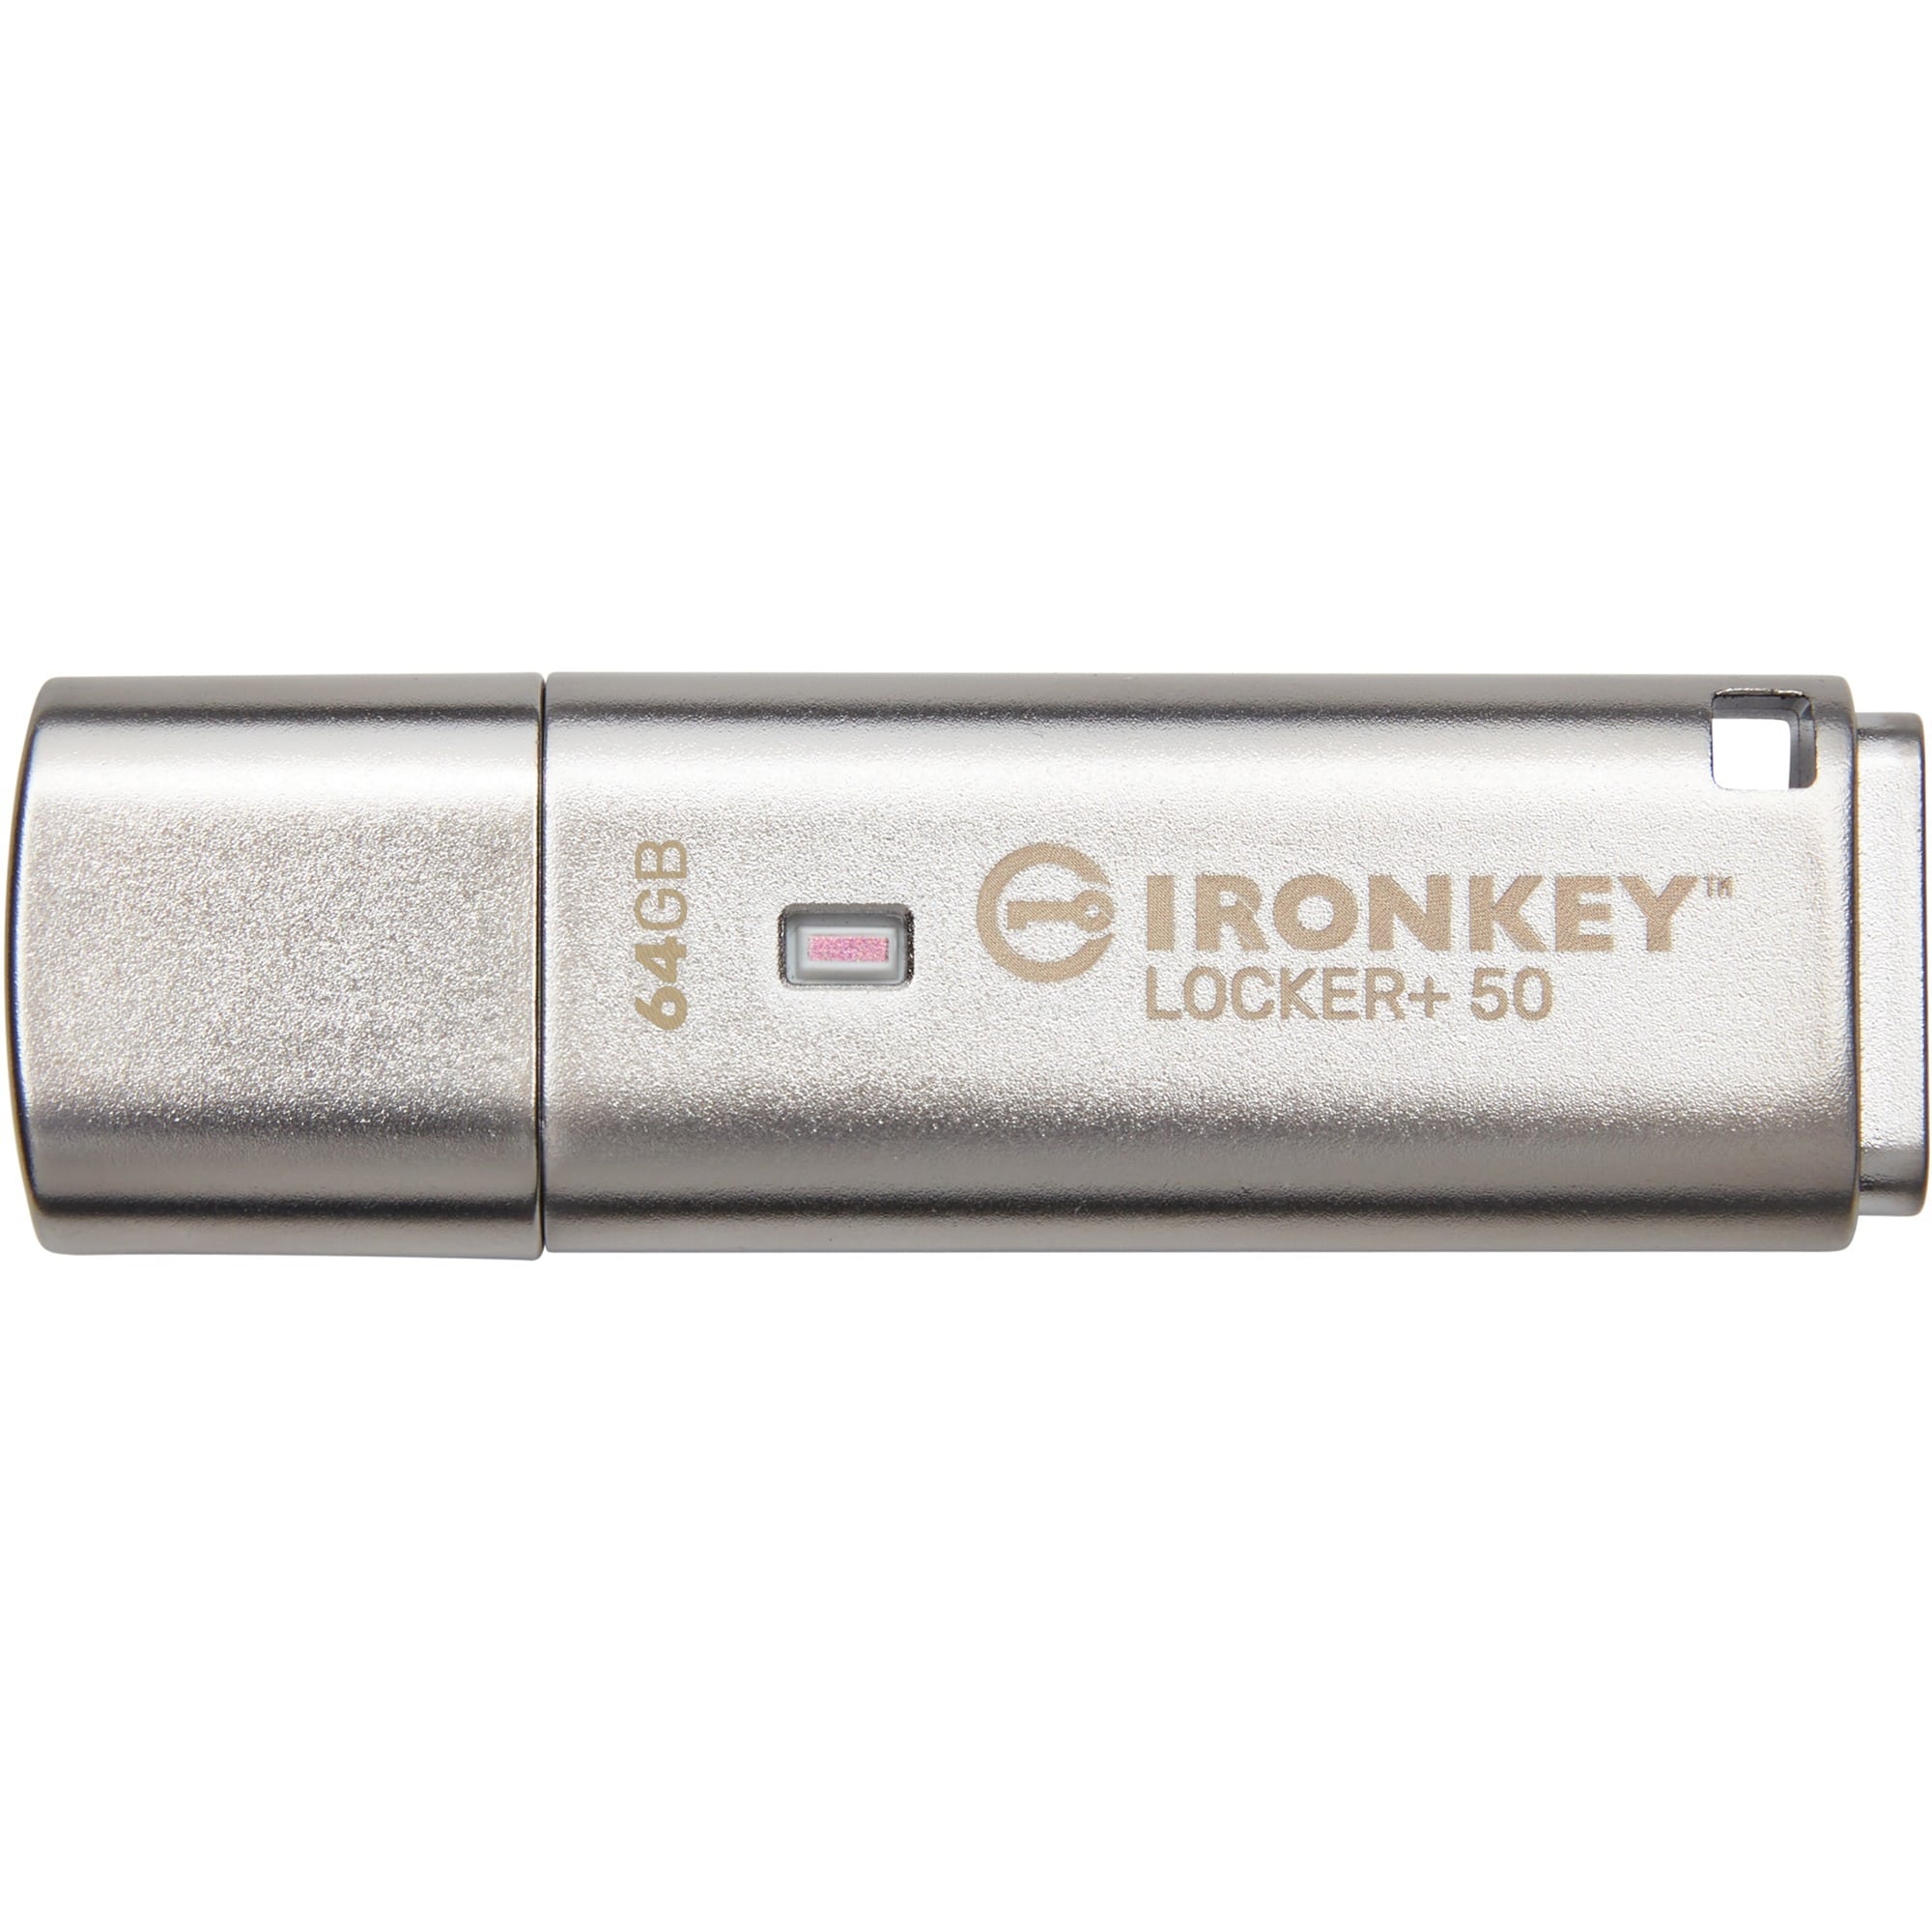 Kingston IronKey Locker+ 50 64 GB